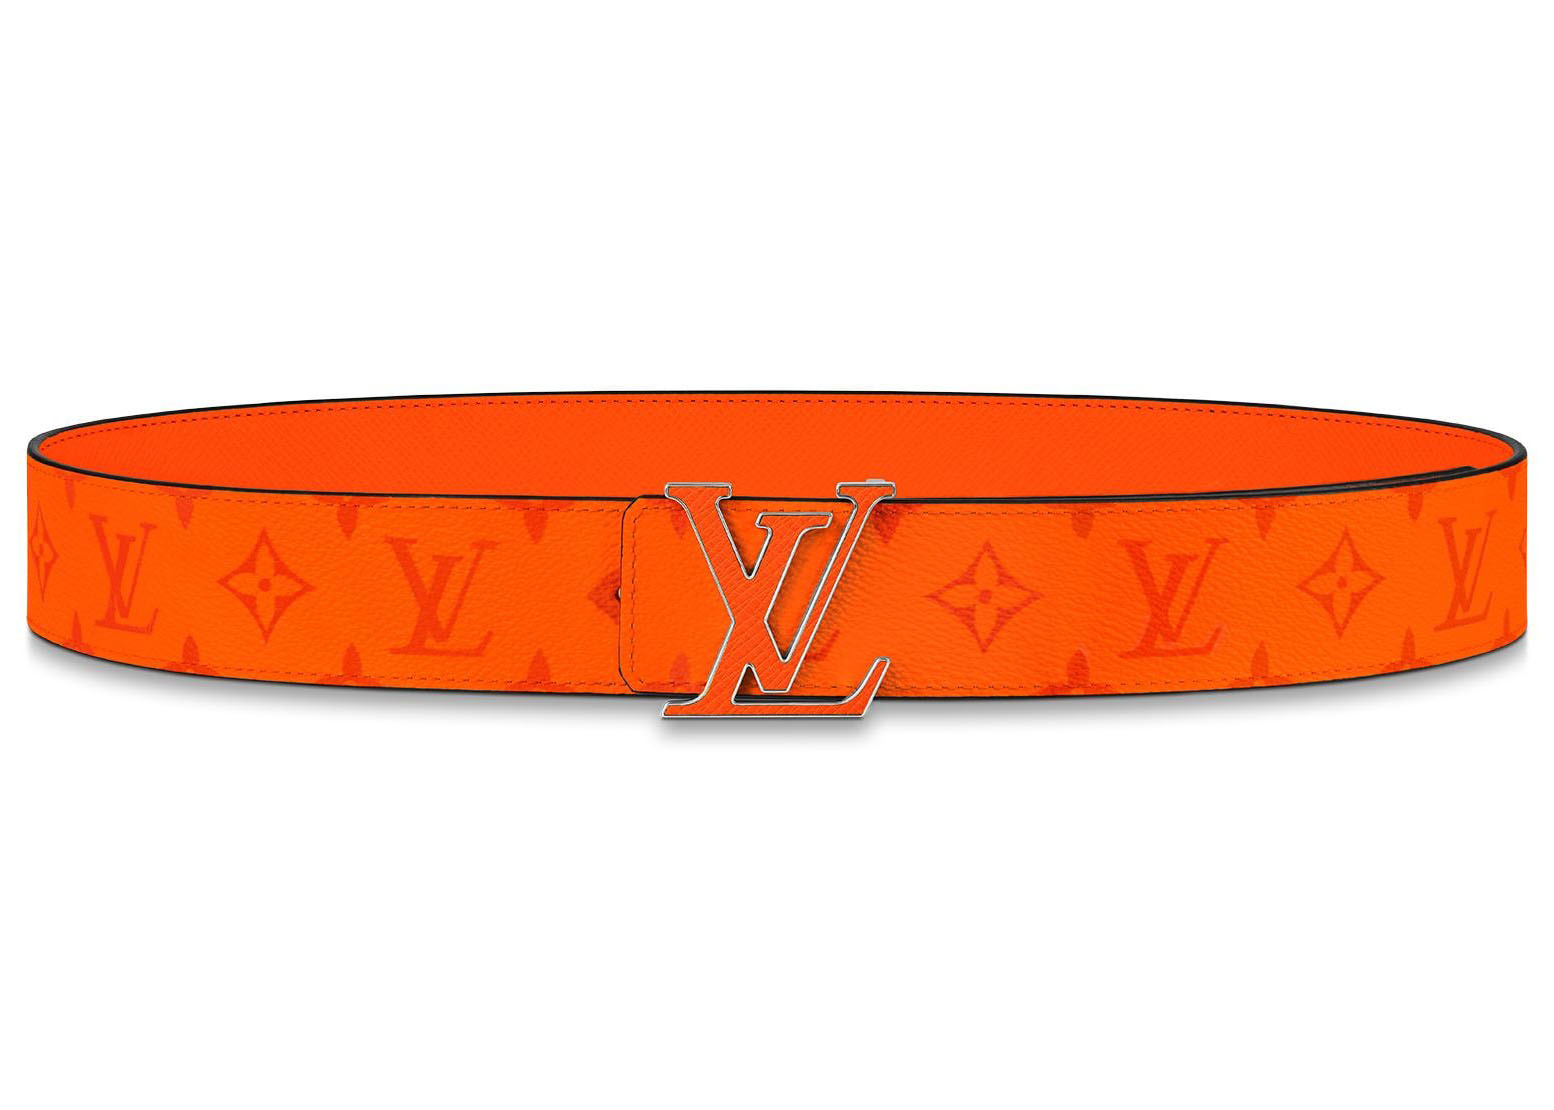 Louis Vuitton LV Initials Reversible Belt Monogram 40MM Volcano